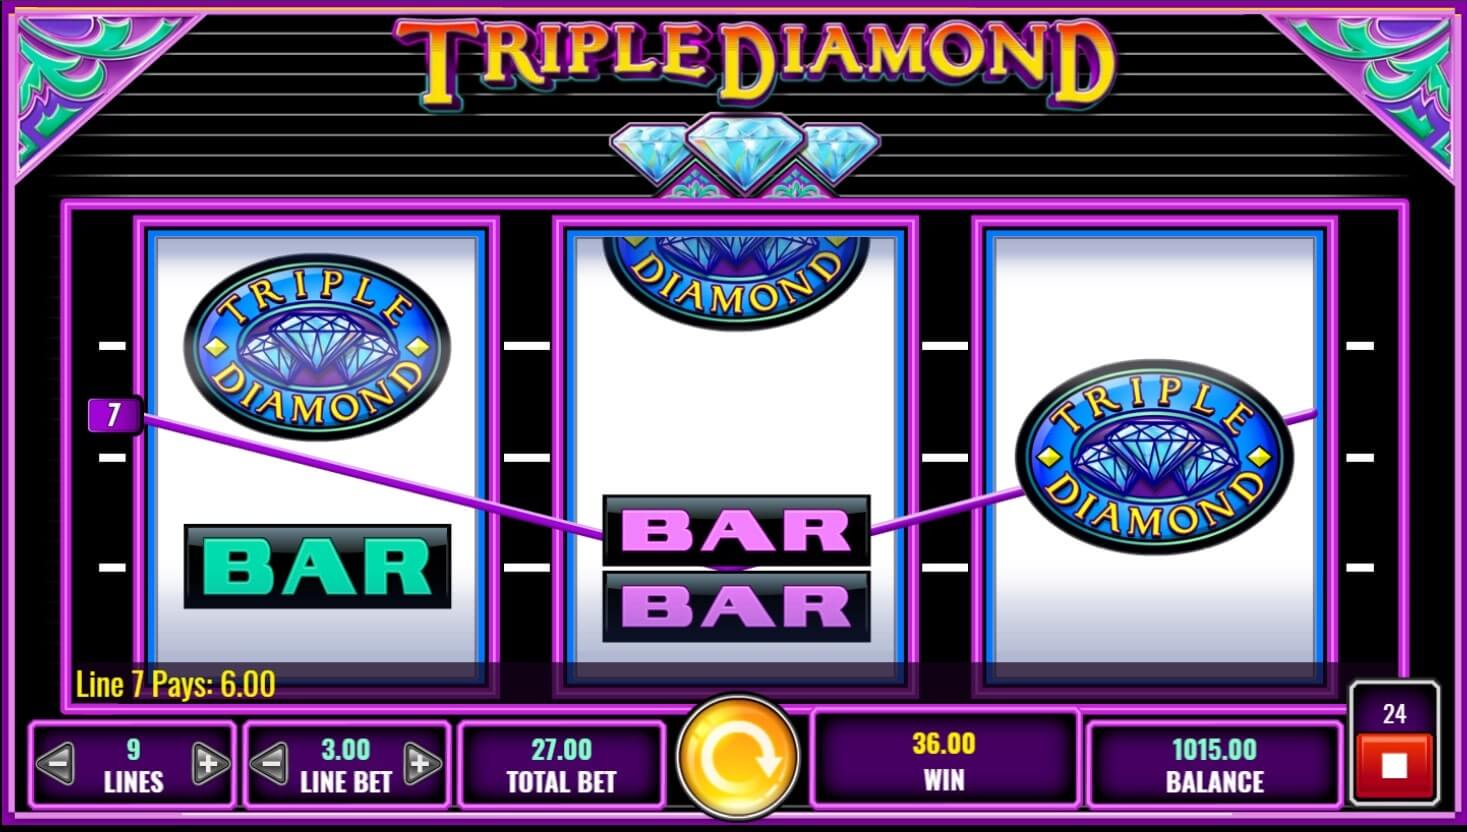 Triple Diamond Slot by IGT